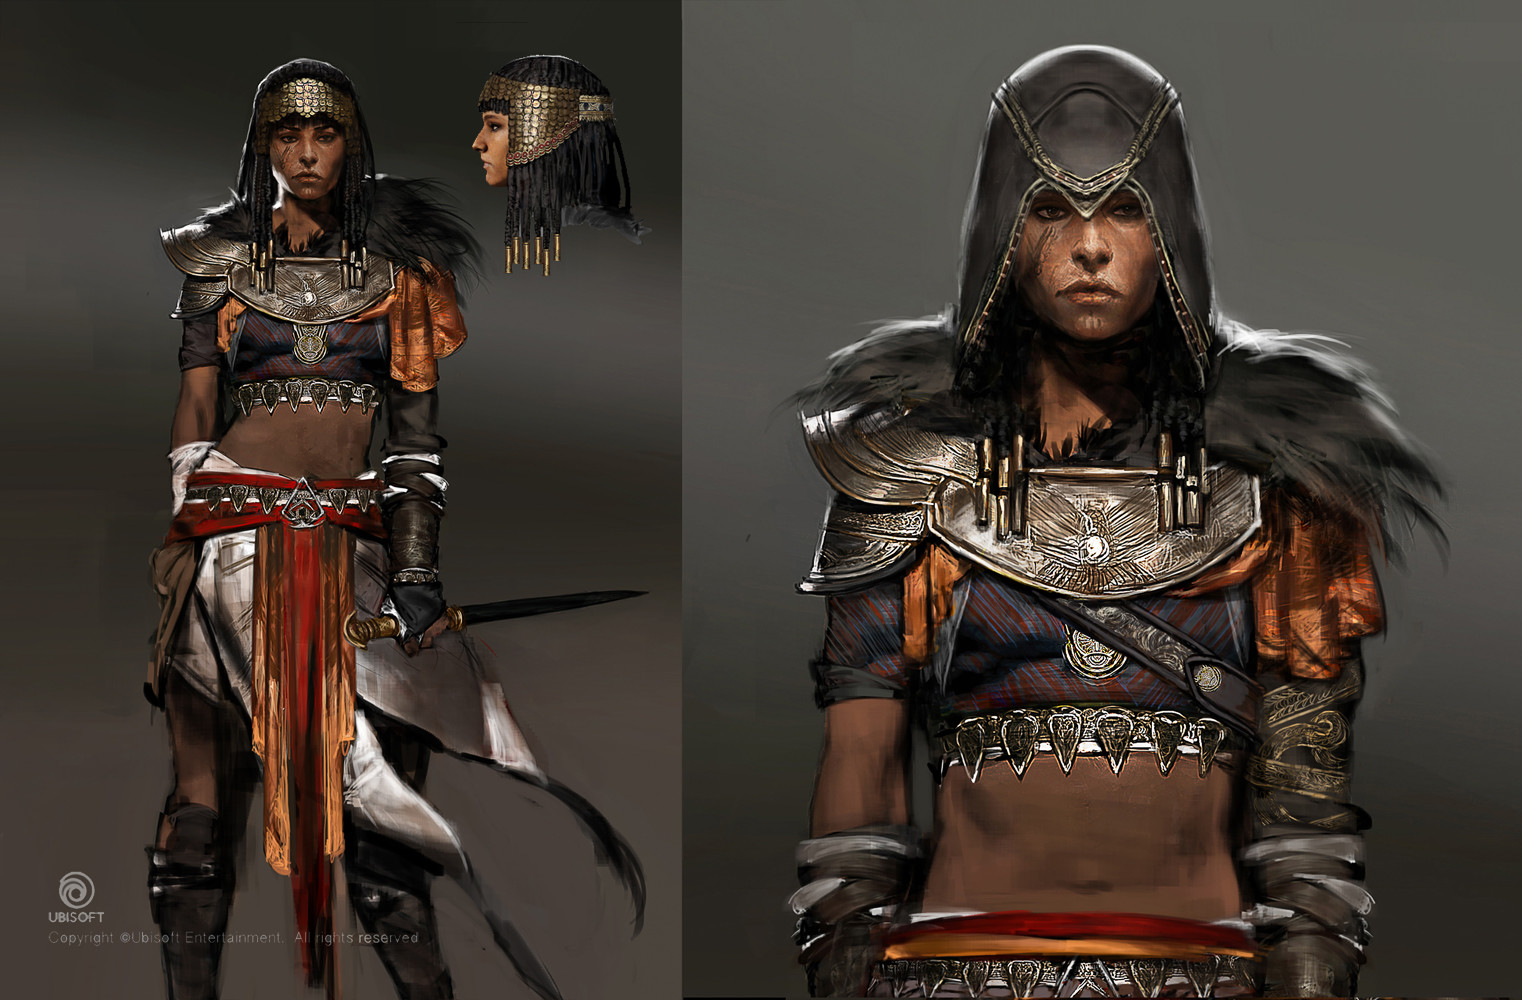 ArtStation - Assassin's Creed: Origins The Hidden Ones DLC outfits - Bayek  and Aya